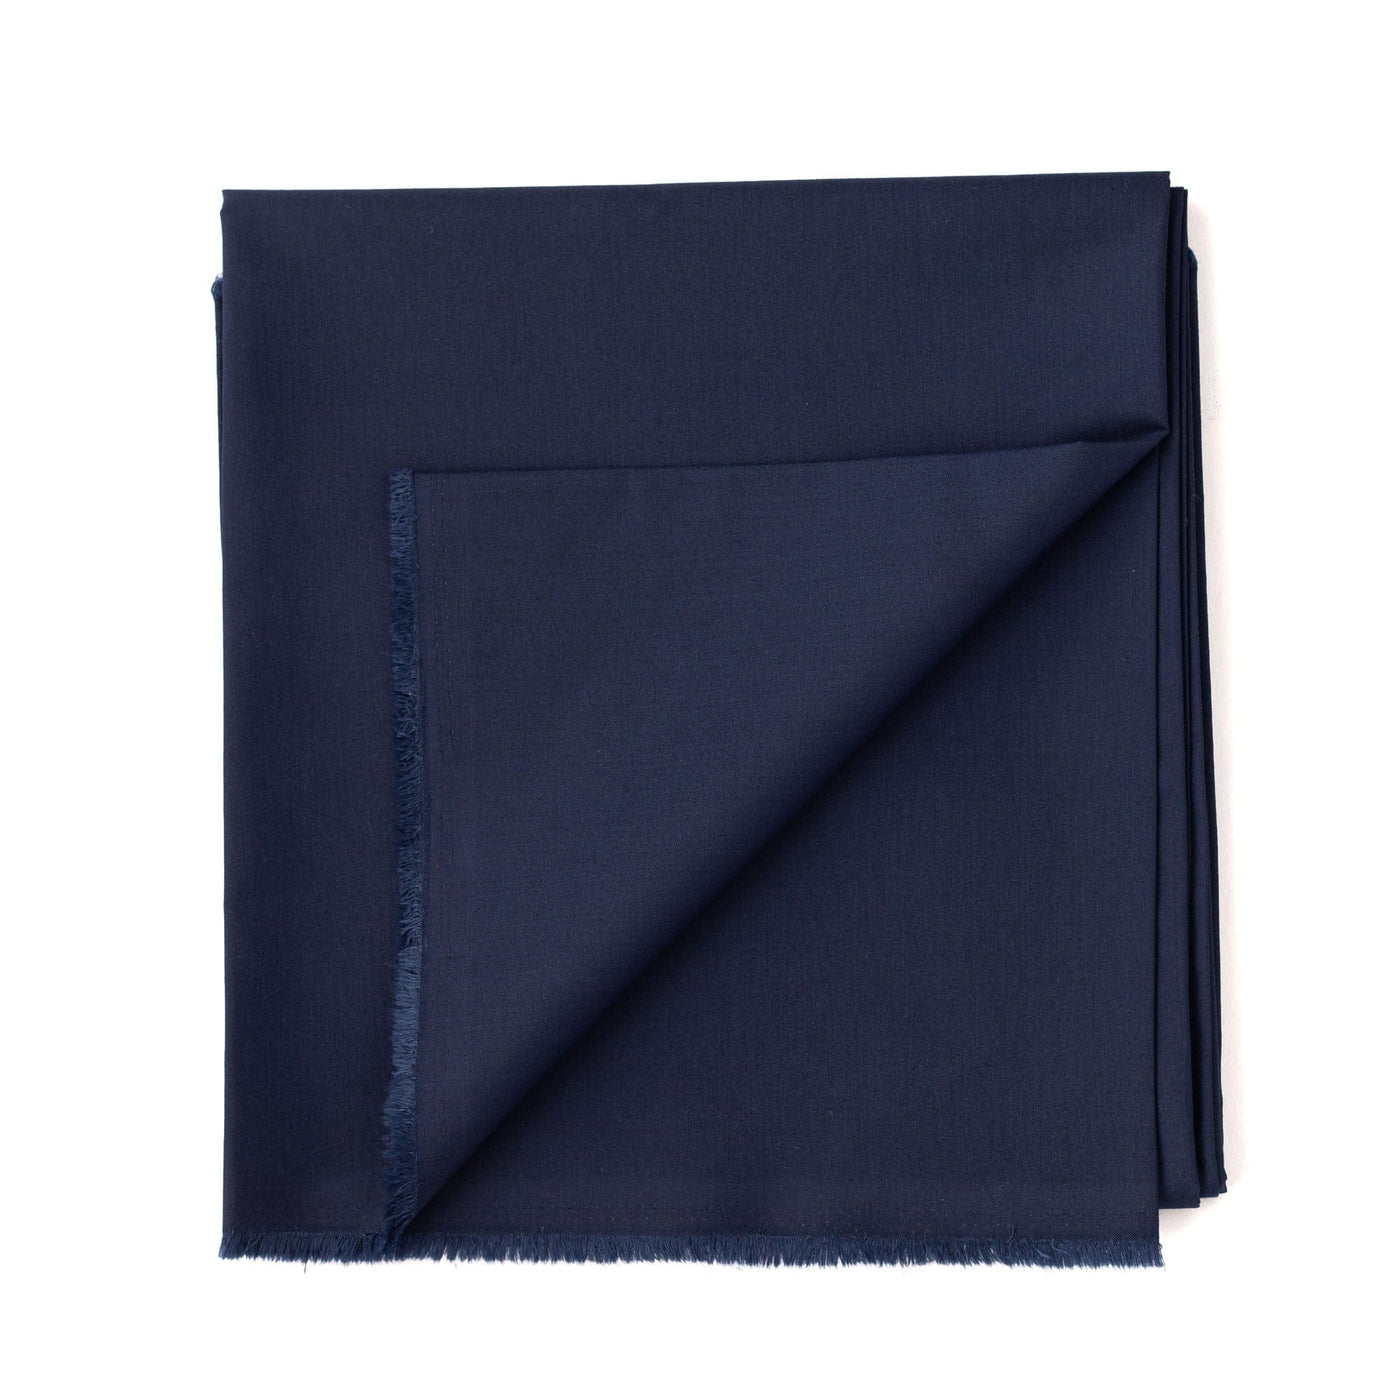 Fabric Pandit Cut Piece (CUT PIECE) English Blue Cotton Poplin Men's Shirt Fabric (Width 58 inch)